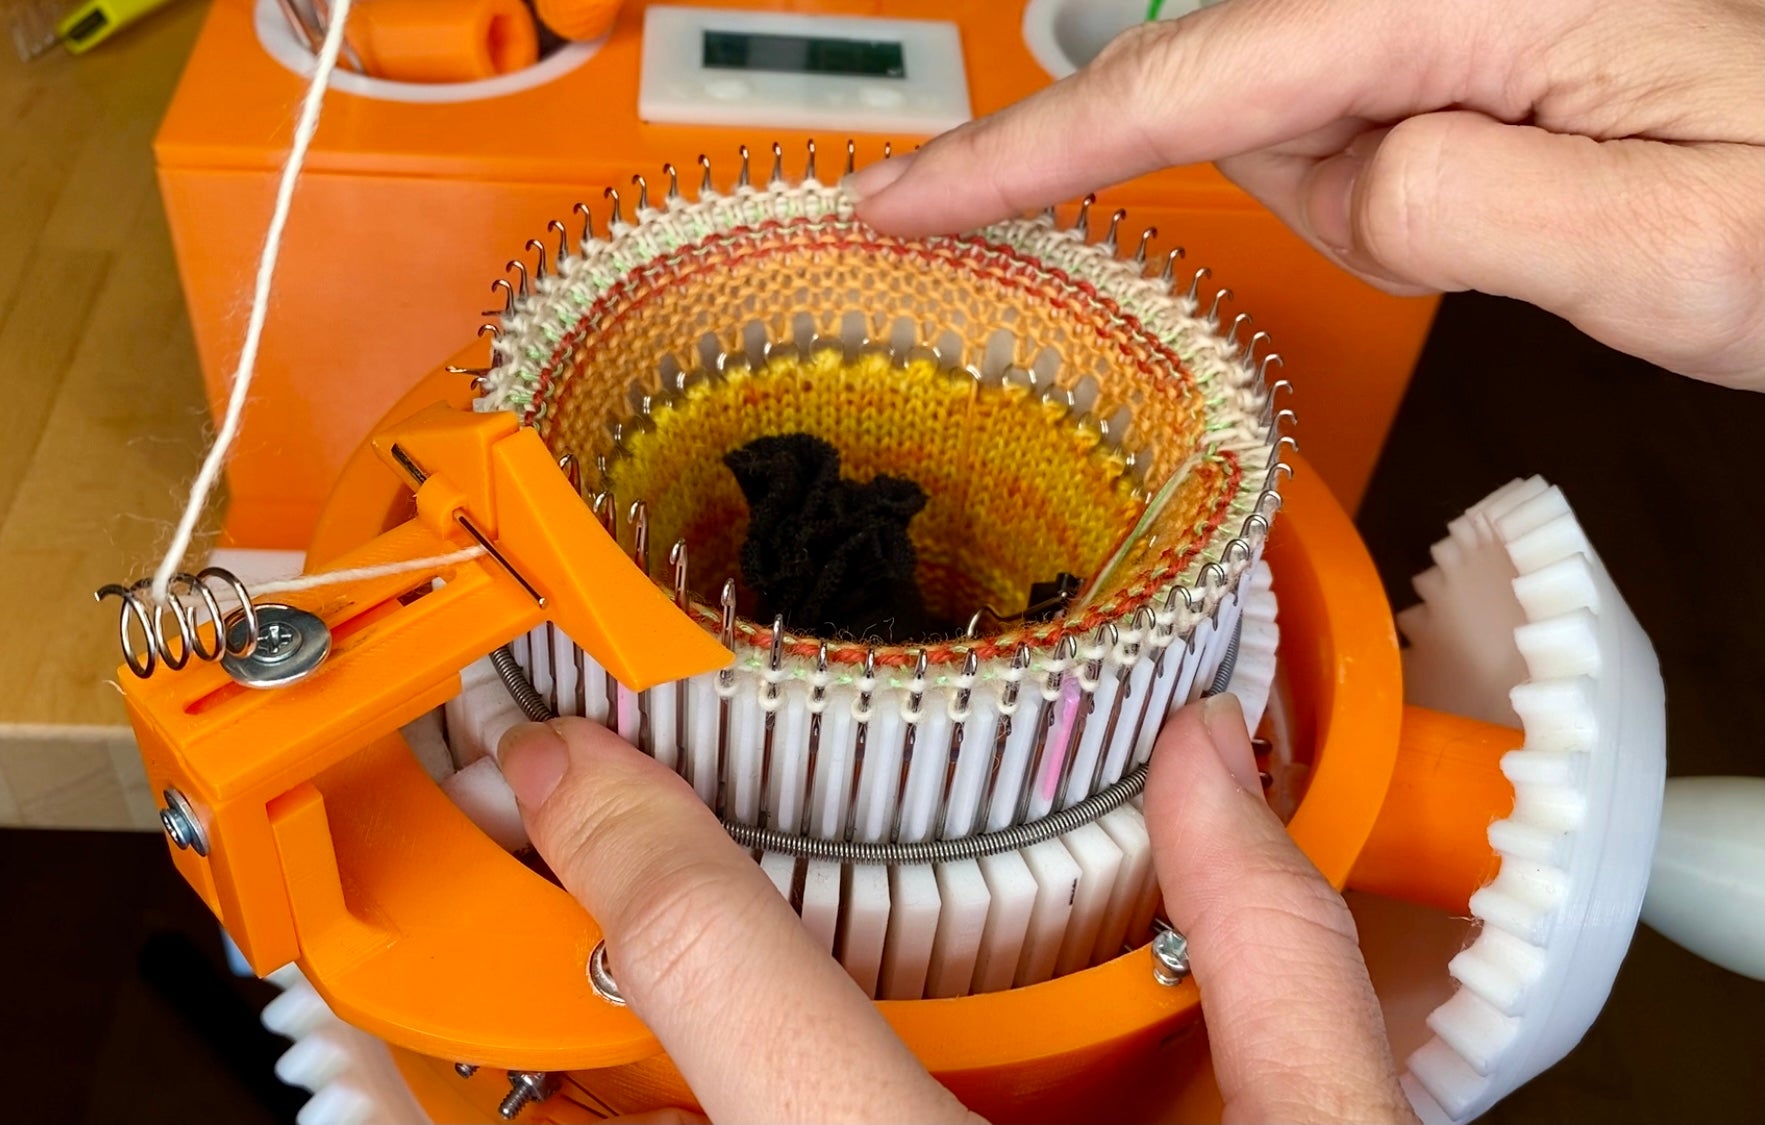 The Dean and Bean circular sock machine is amazing! : r/MachineKnitting